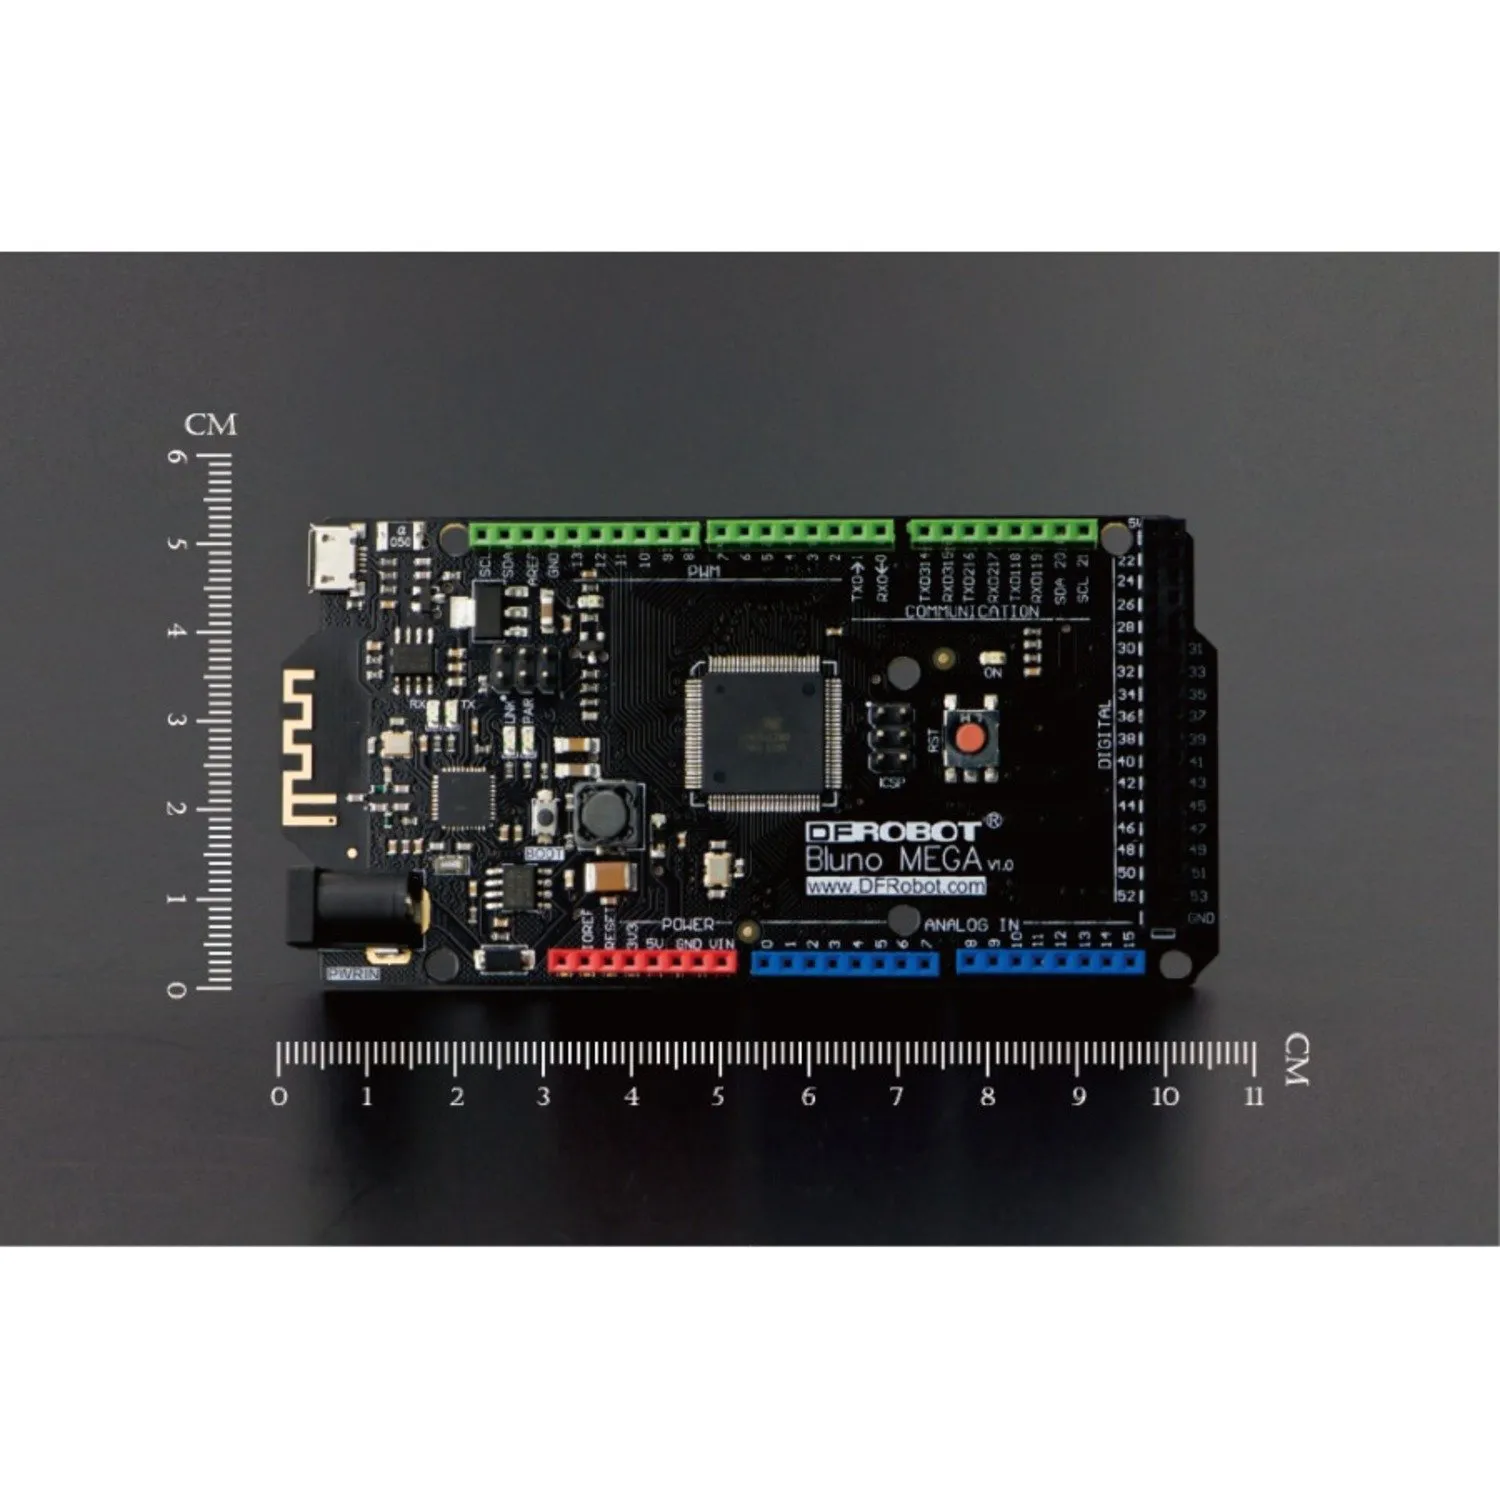 Photo of Bluno Mega 2560 - An Arduino Mega 2560 with Bluetooth 4.0